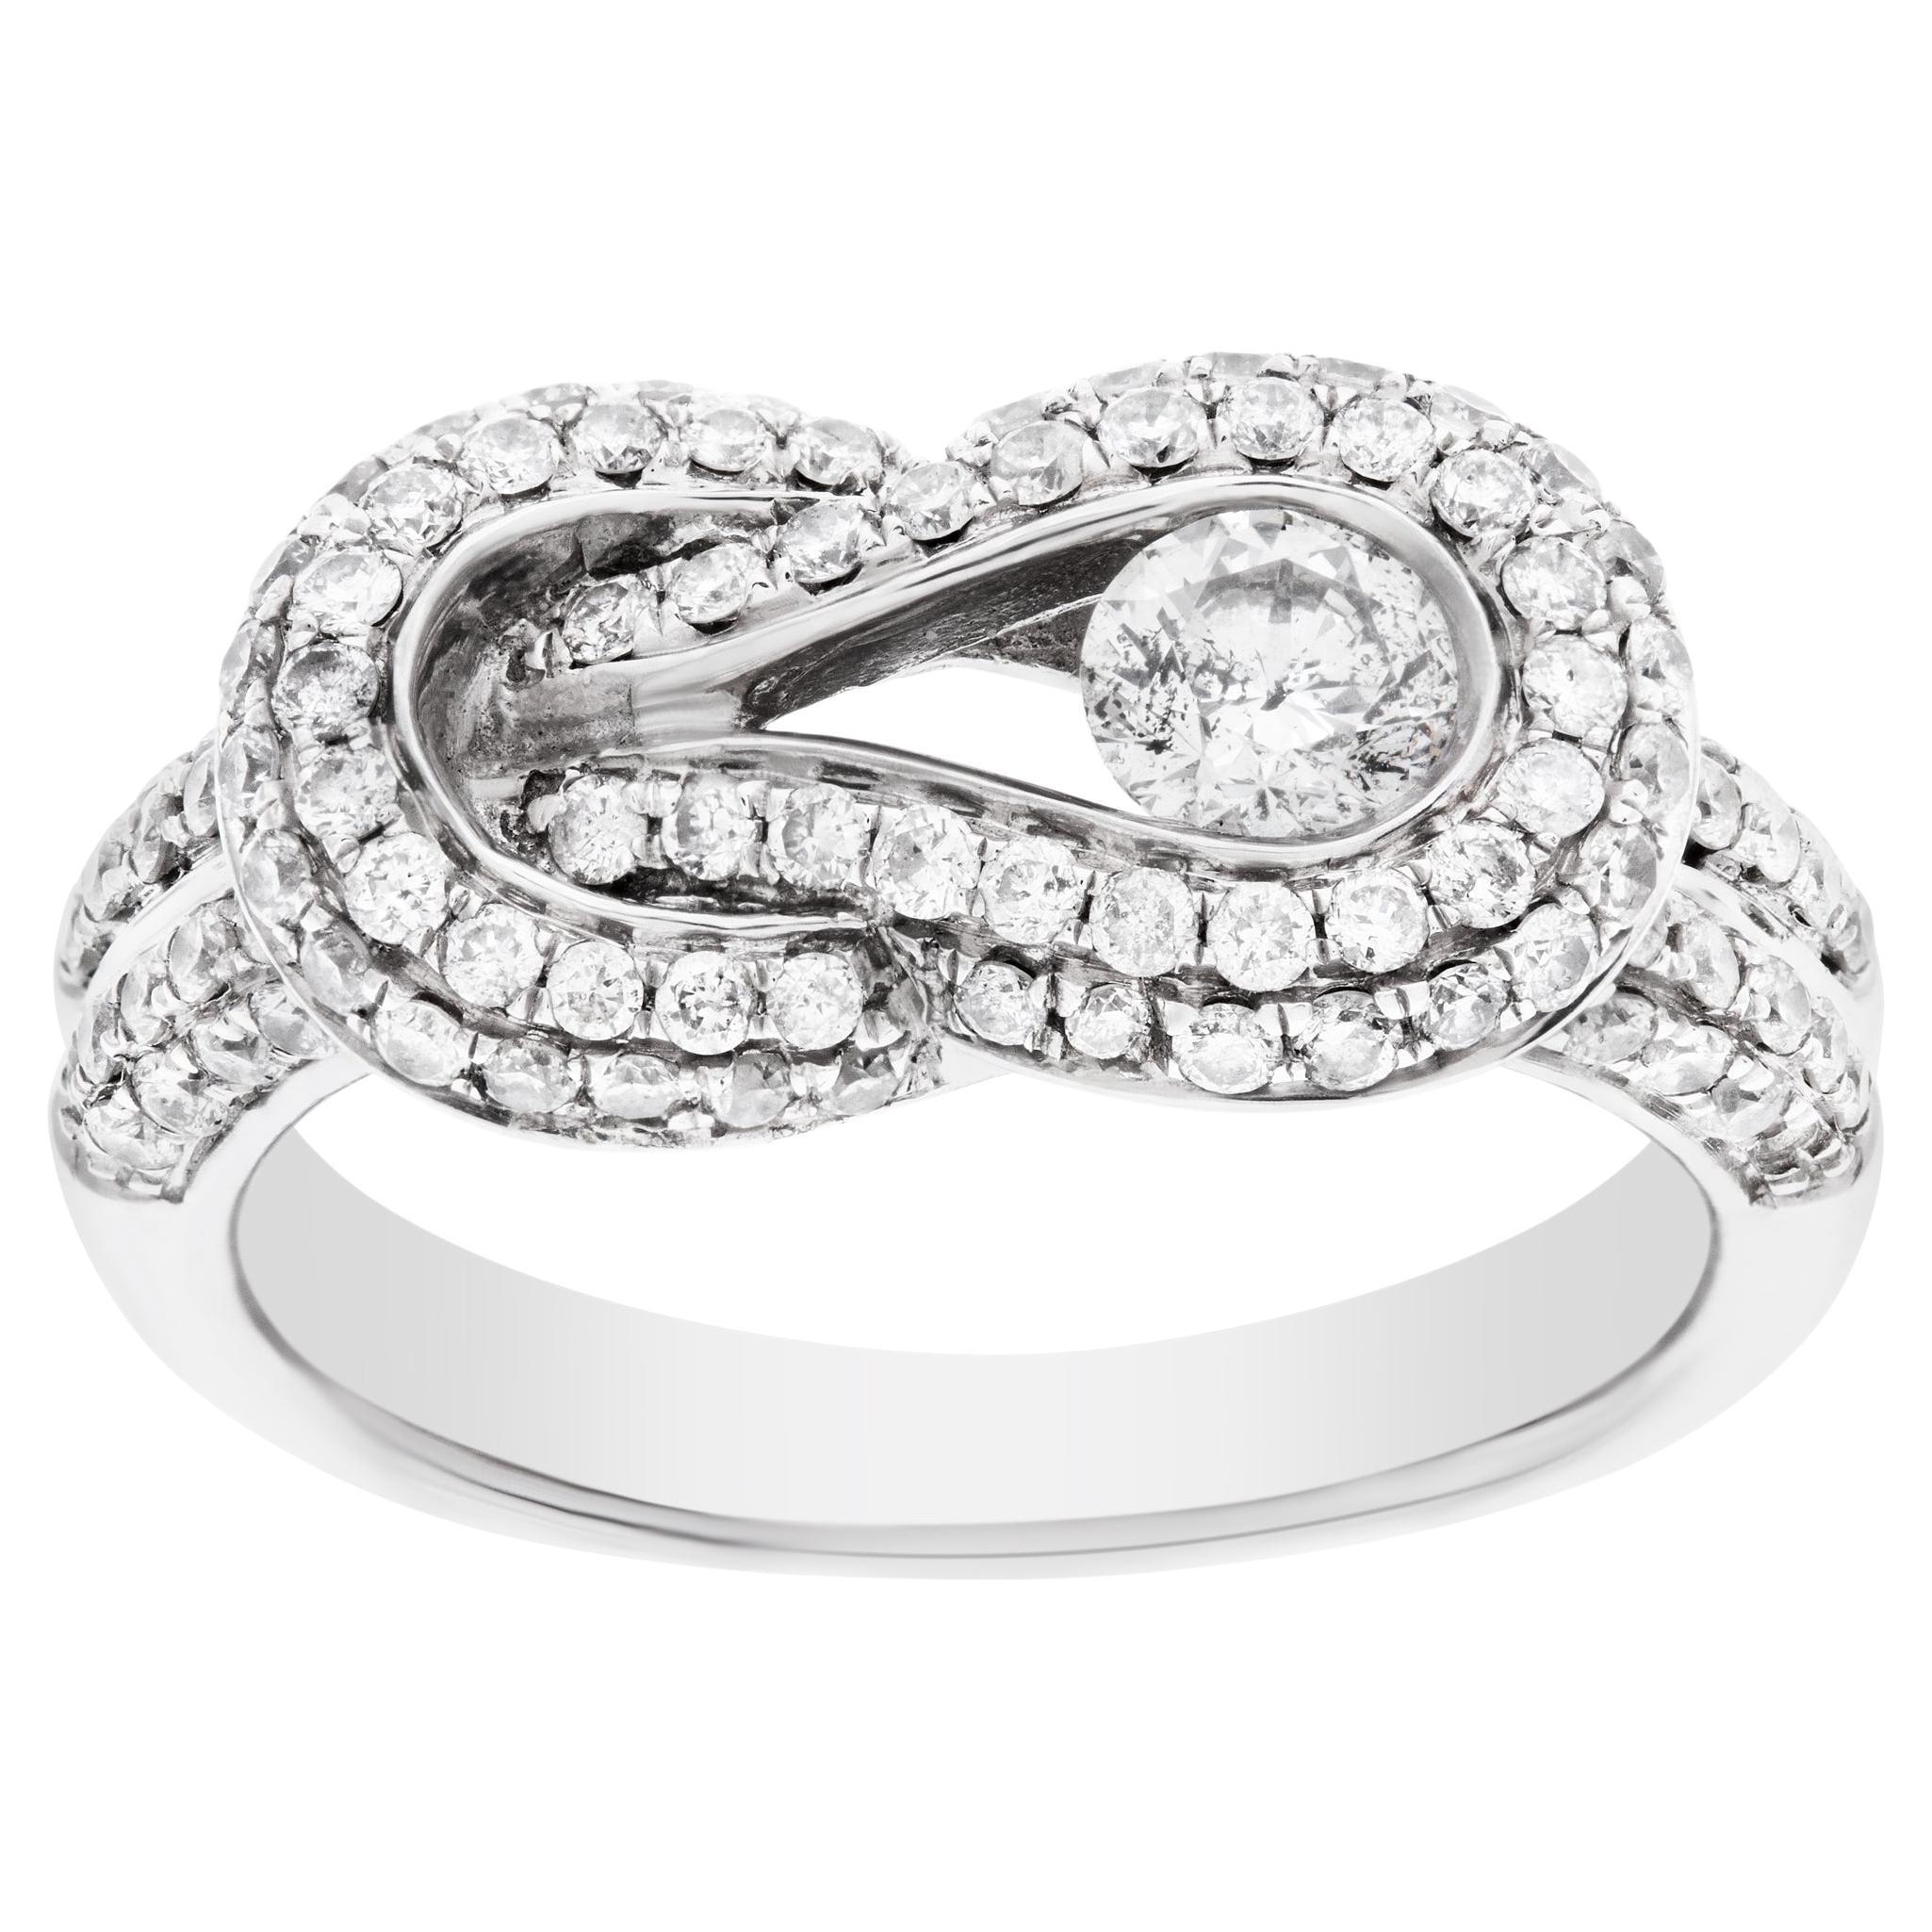 Diamond Knot Ring in 14k White Gold, 0.25 Cts Center Diamond